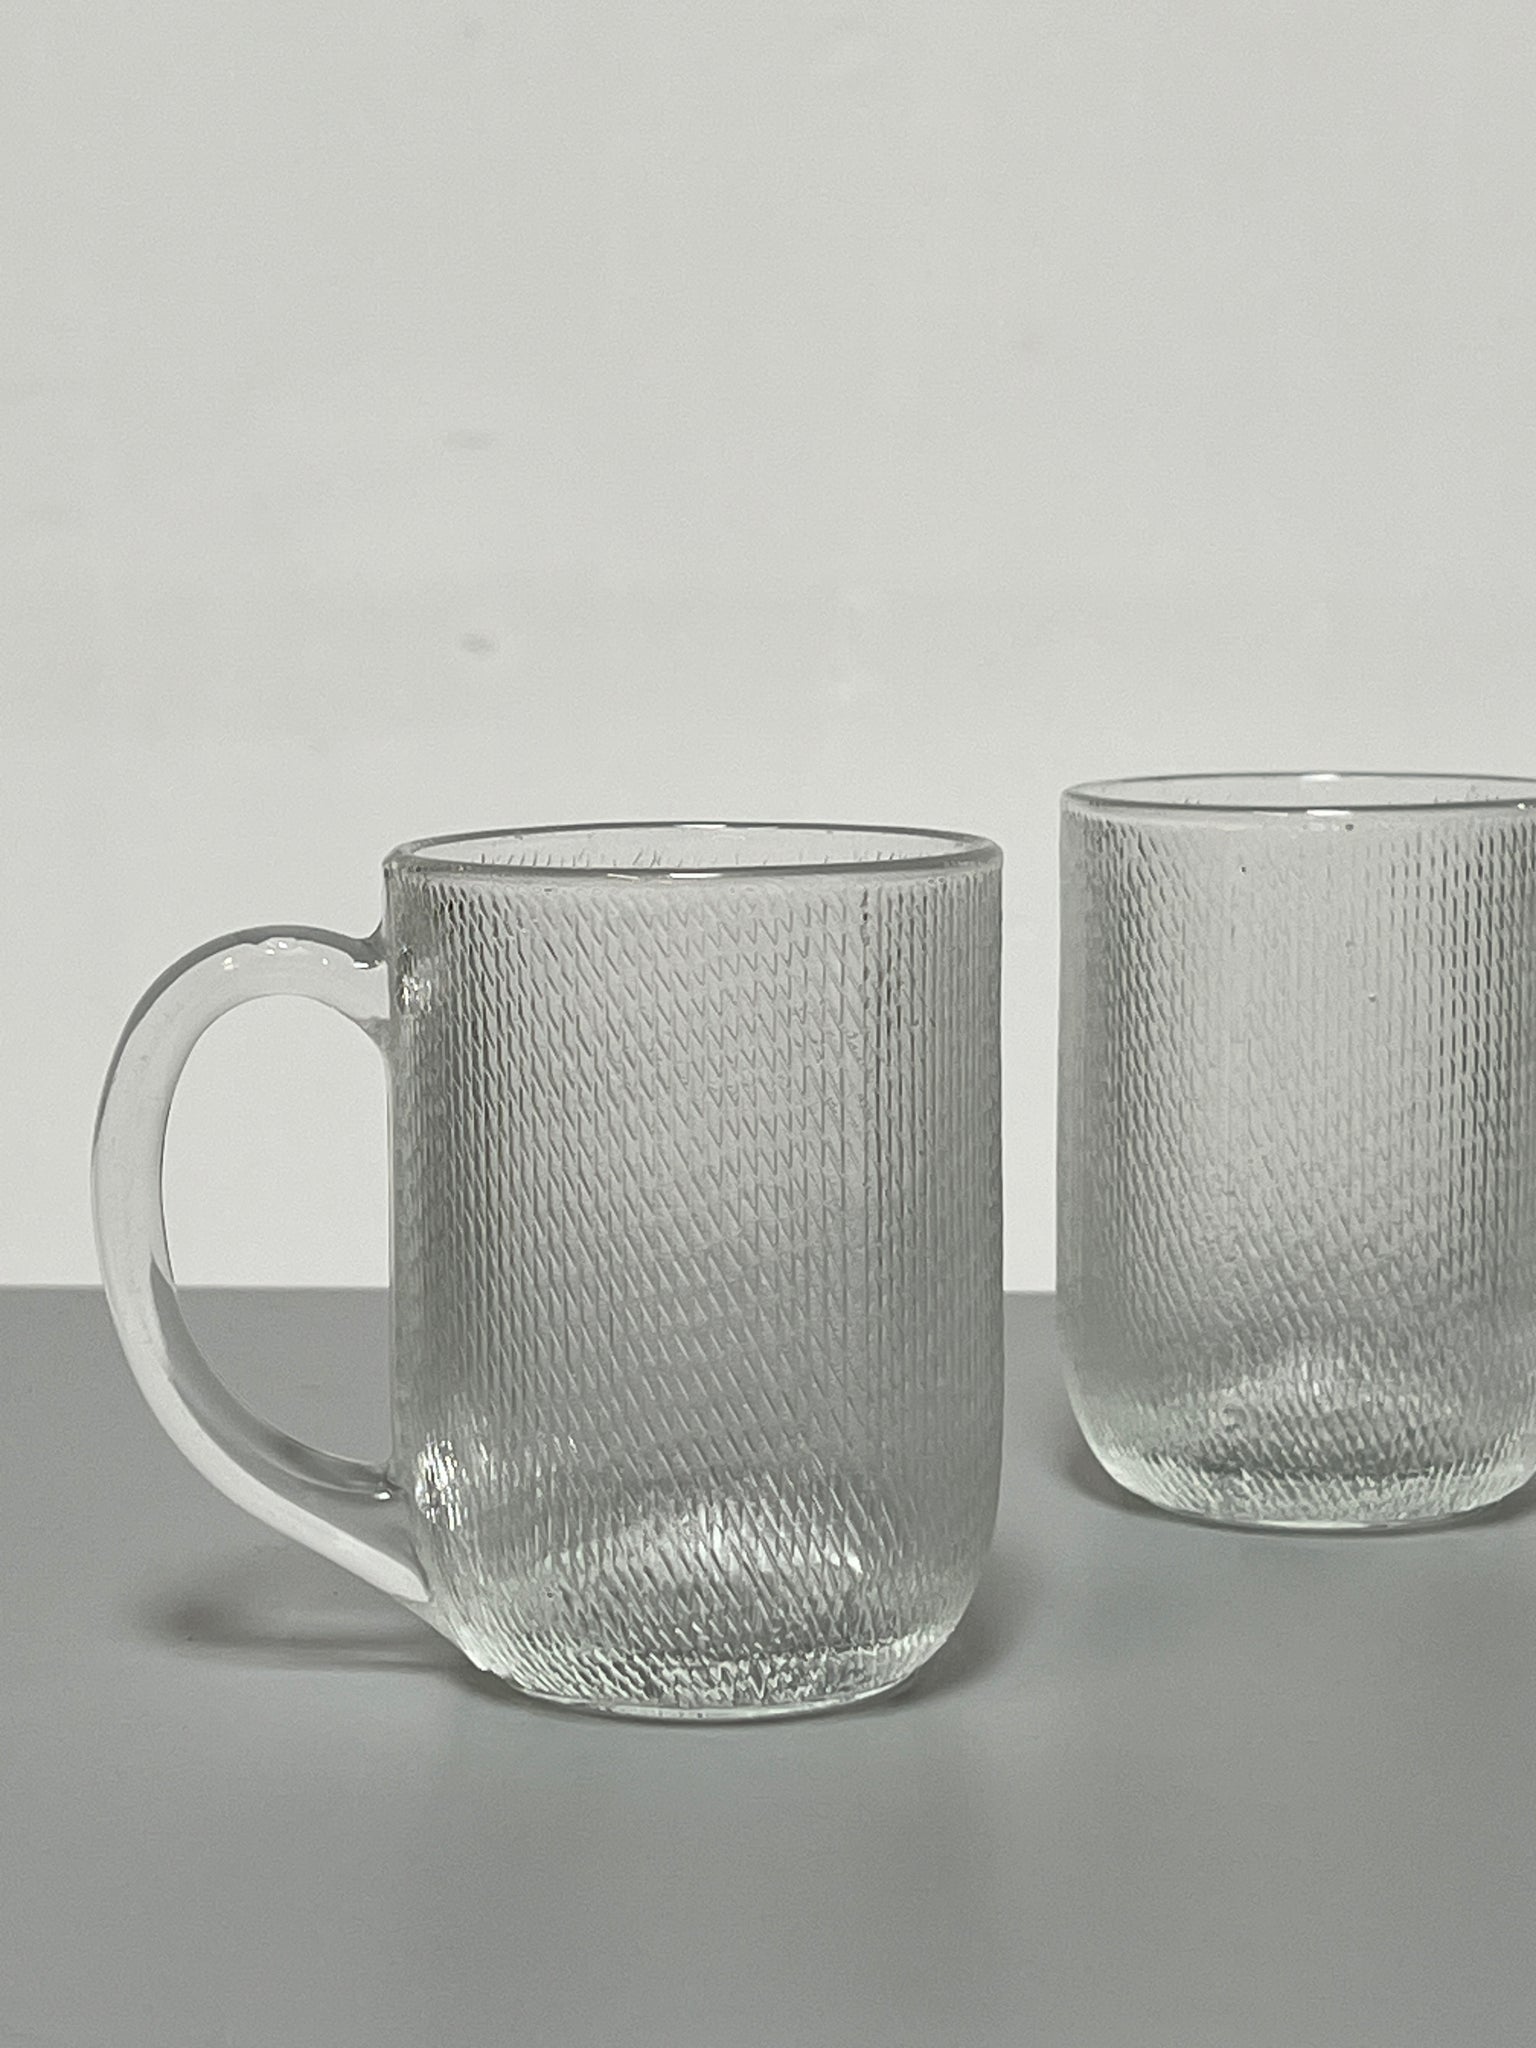 Glass Coffee Mugs by Arcoroc